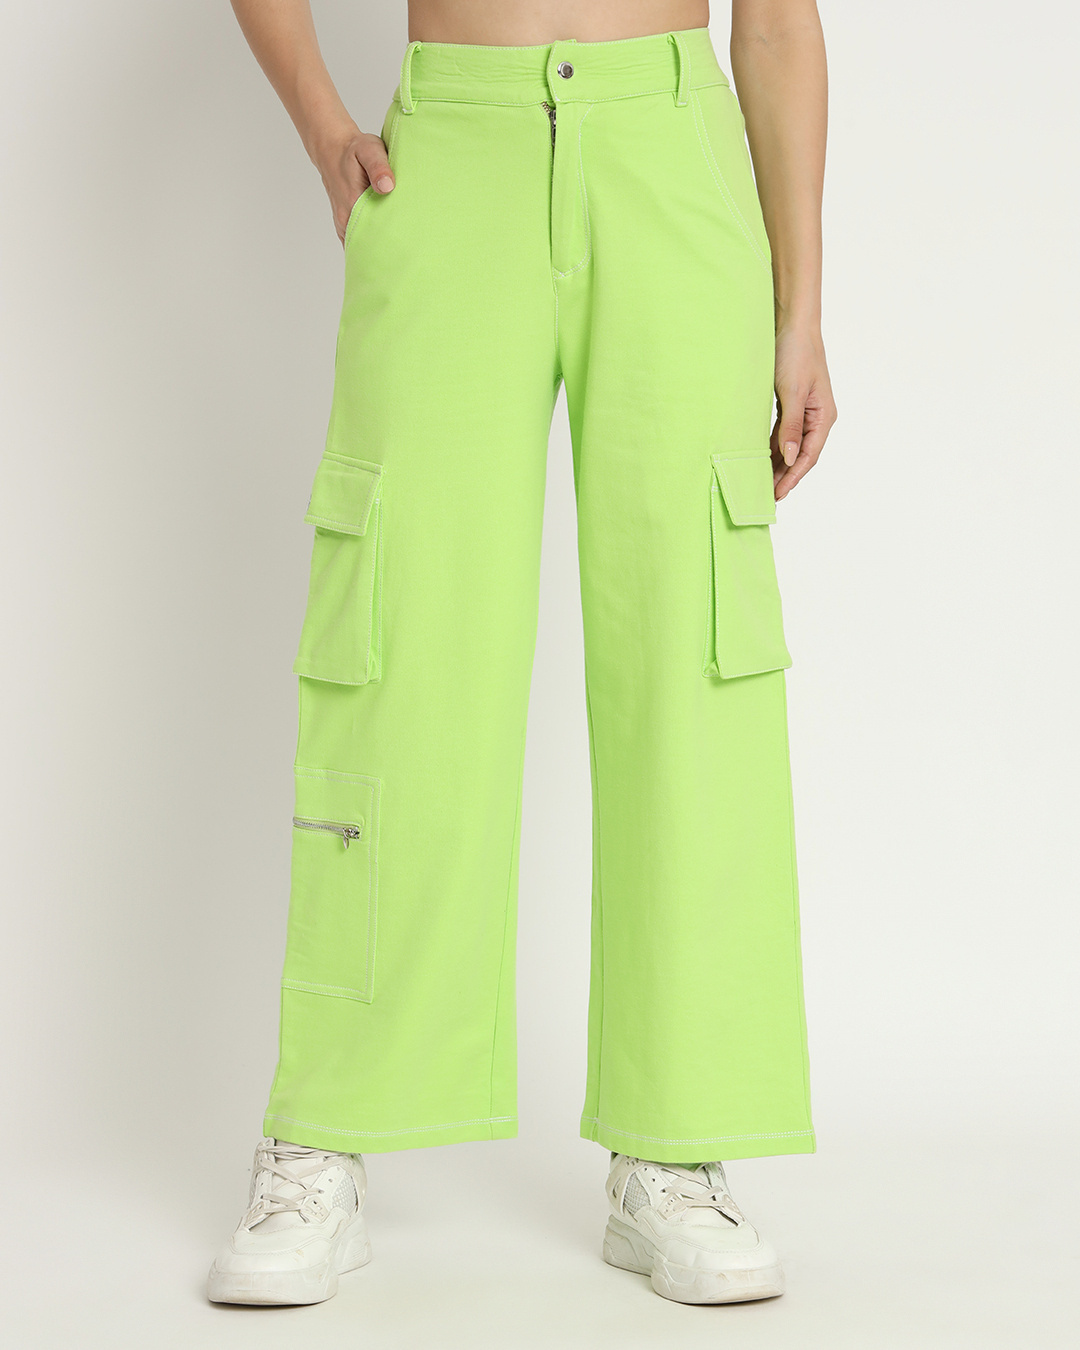 Buy Women's Green Loose Fit Baggy Utility Cargo Korean Pants